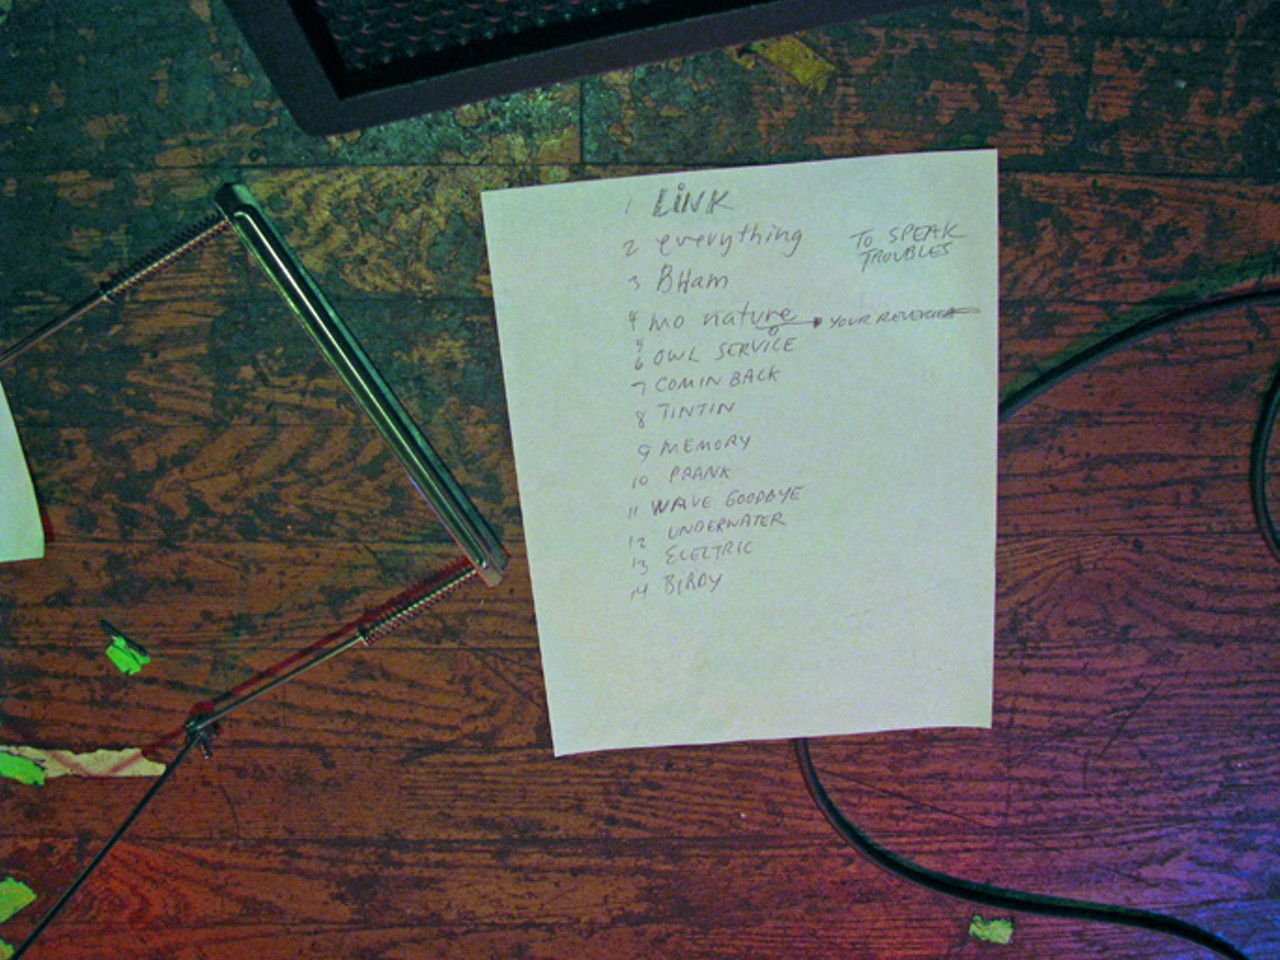 The Stoltz set list next to a harmonica holder.